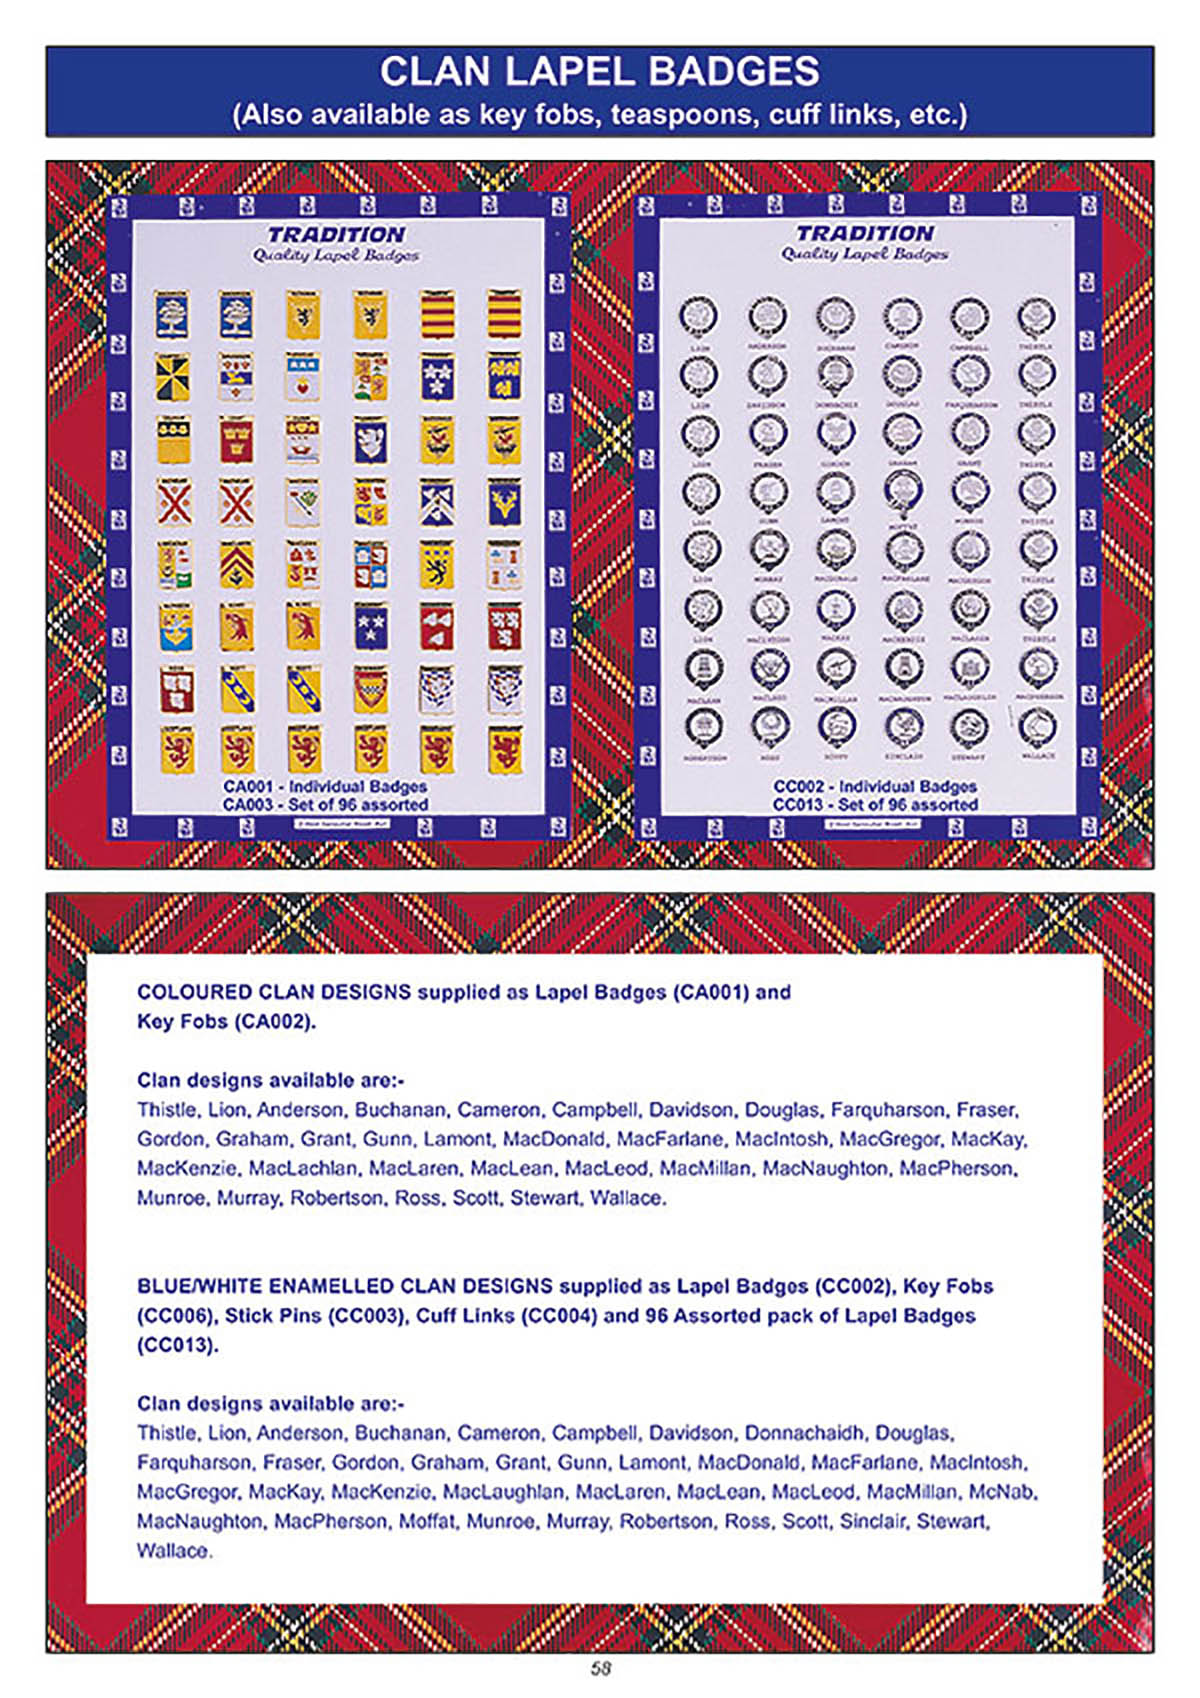 souvenir clan lapel badges giftware